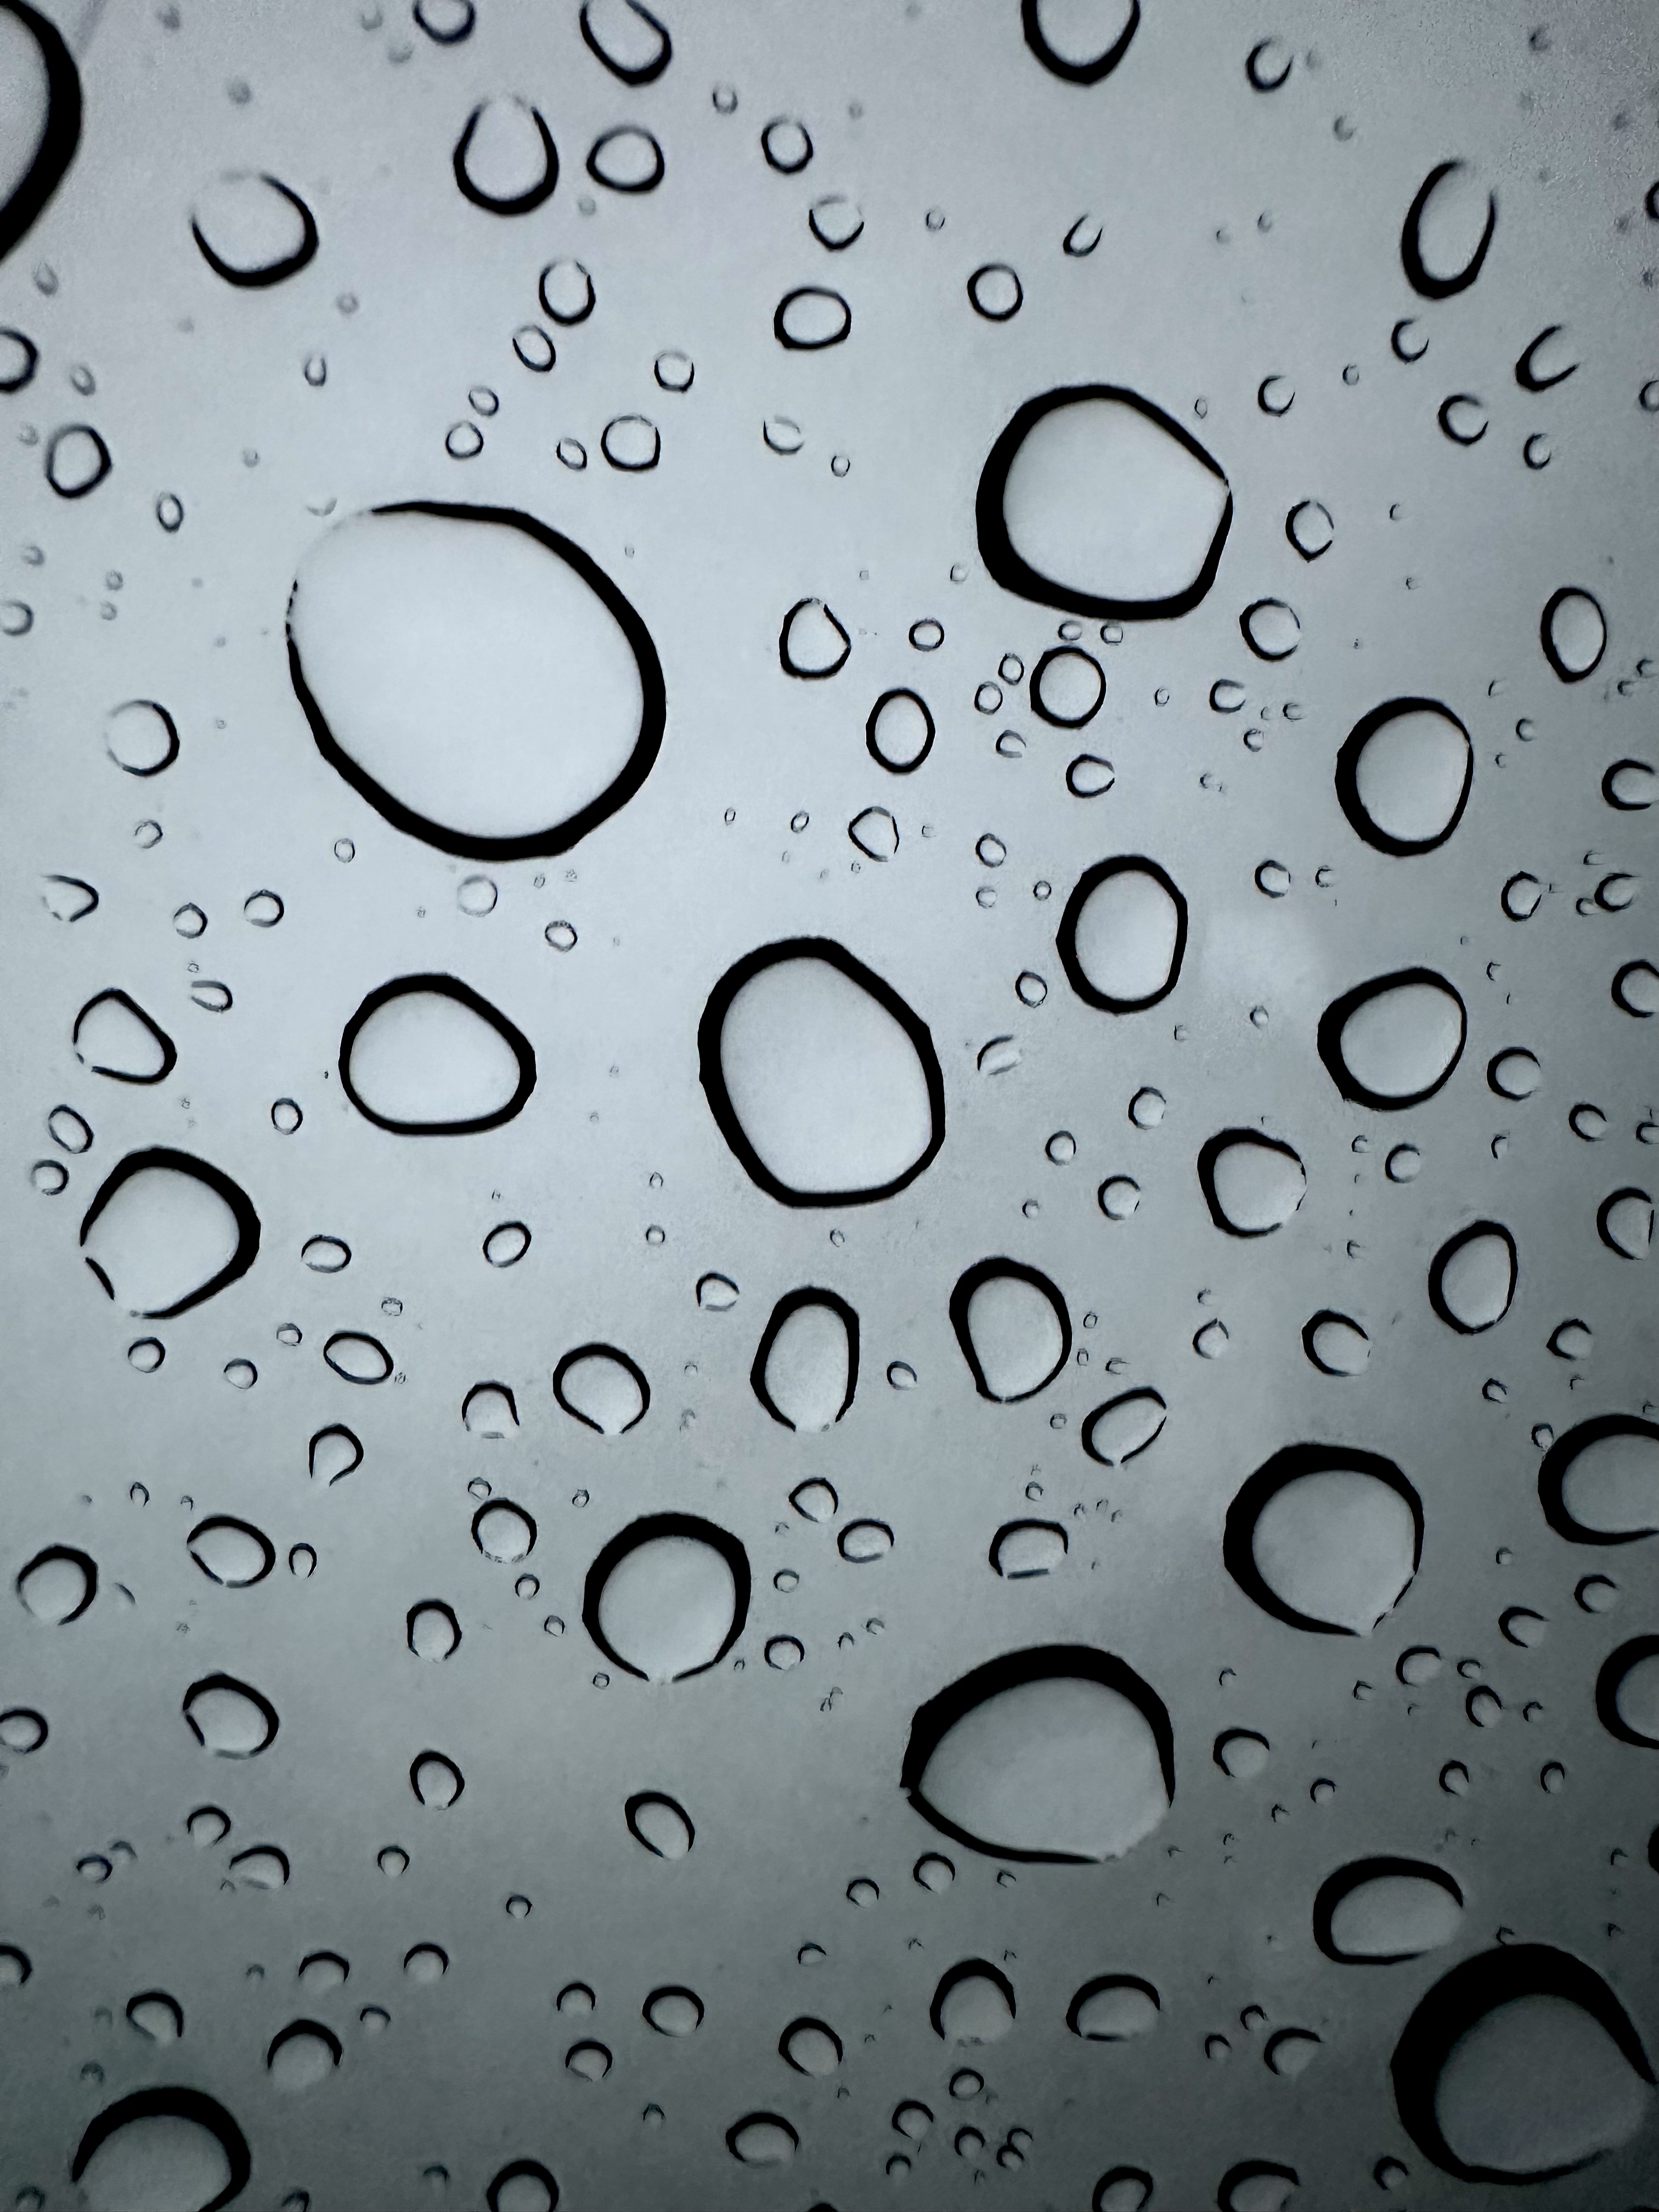 Rain water dropplets on Tesla’s sunroof